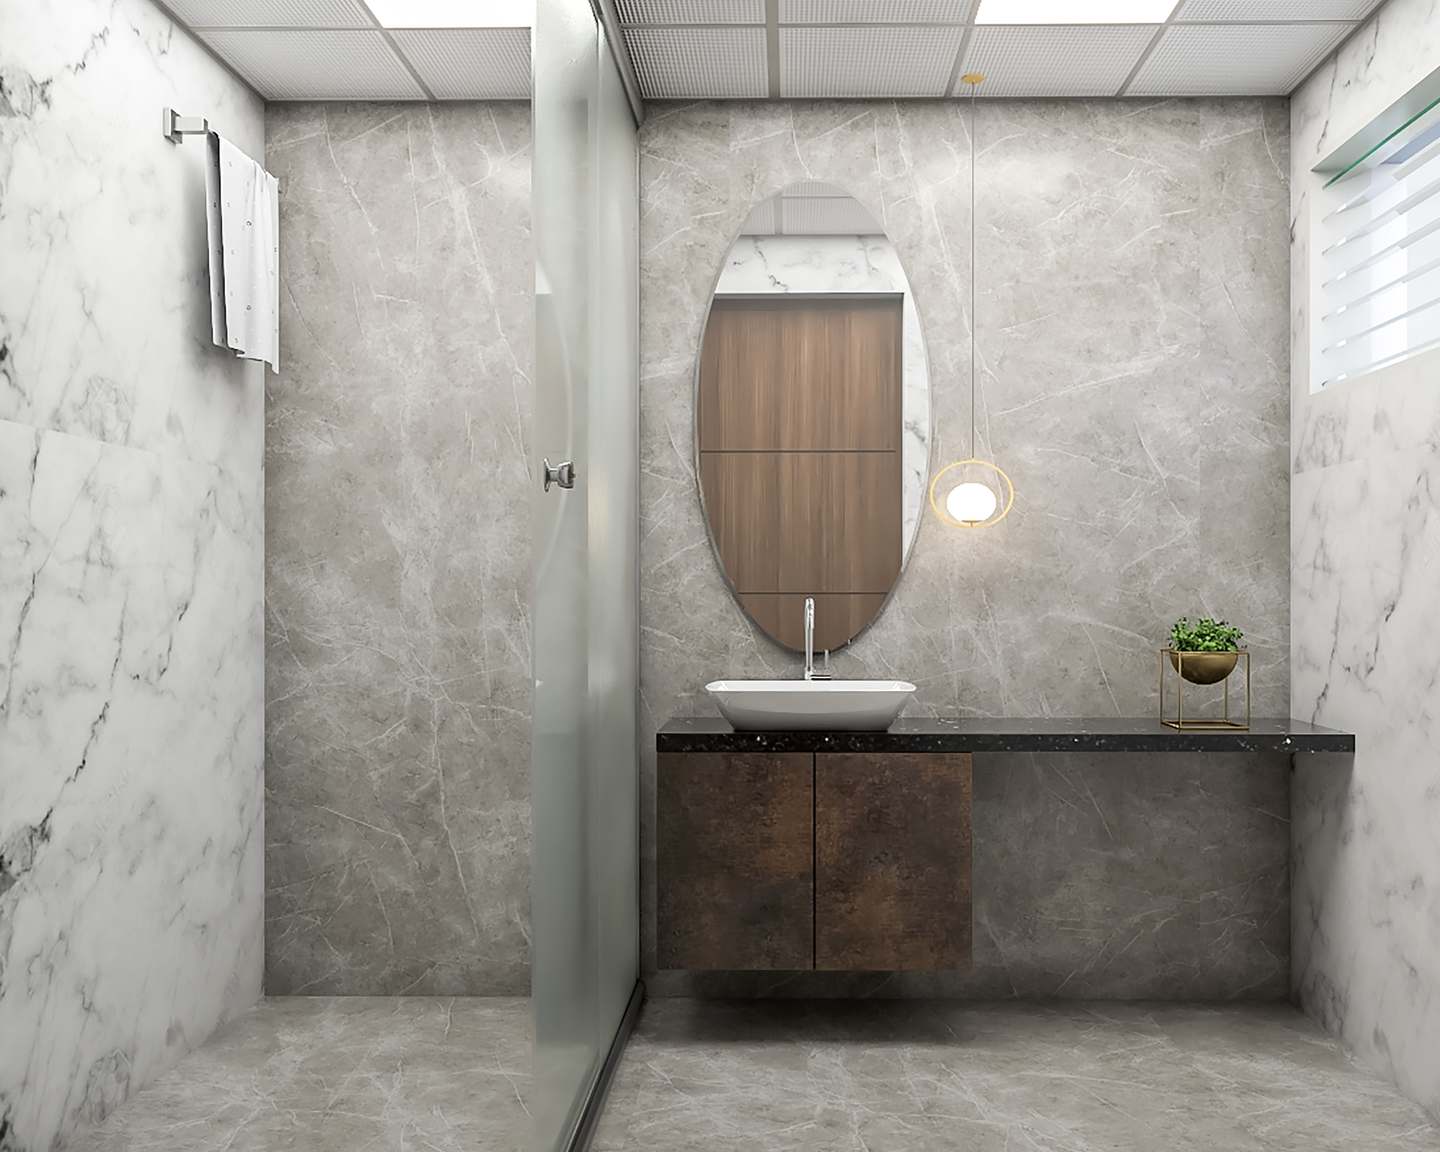 Low Maintenance Spacious Bathroom Ideas - Livspace